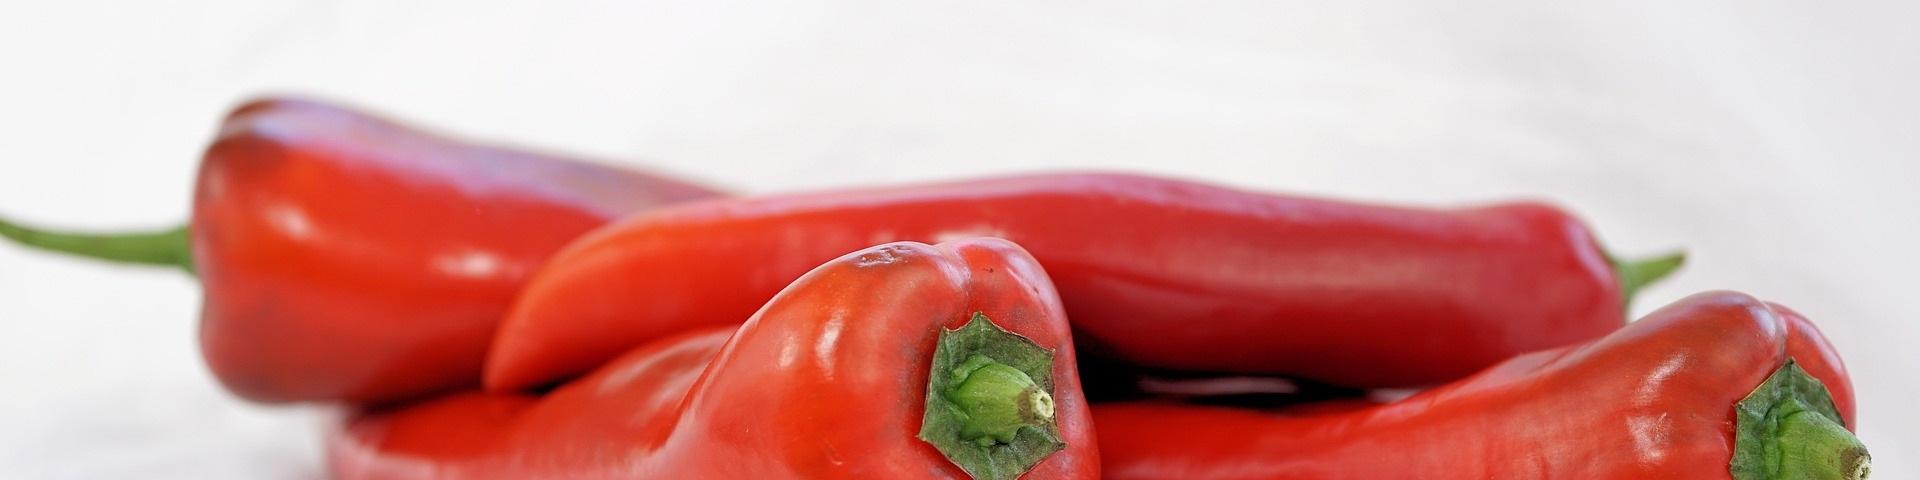 Entering the European market for fresh chilli peppers